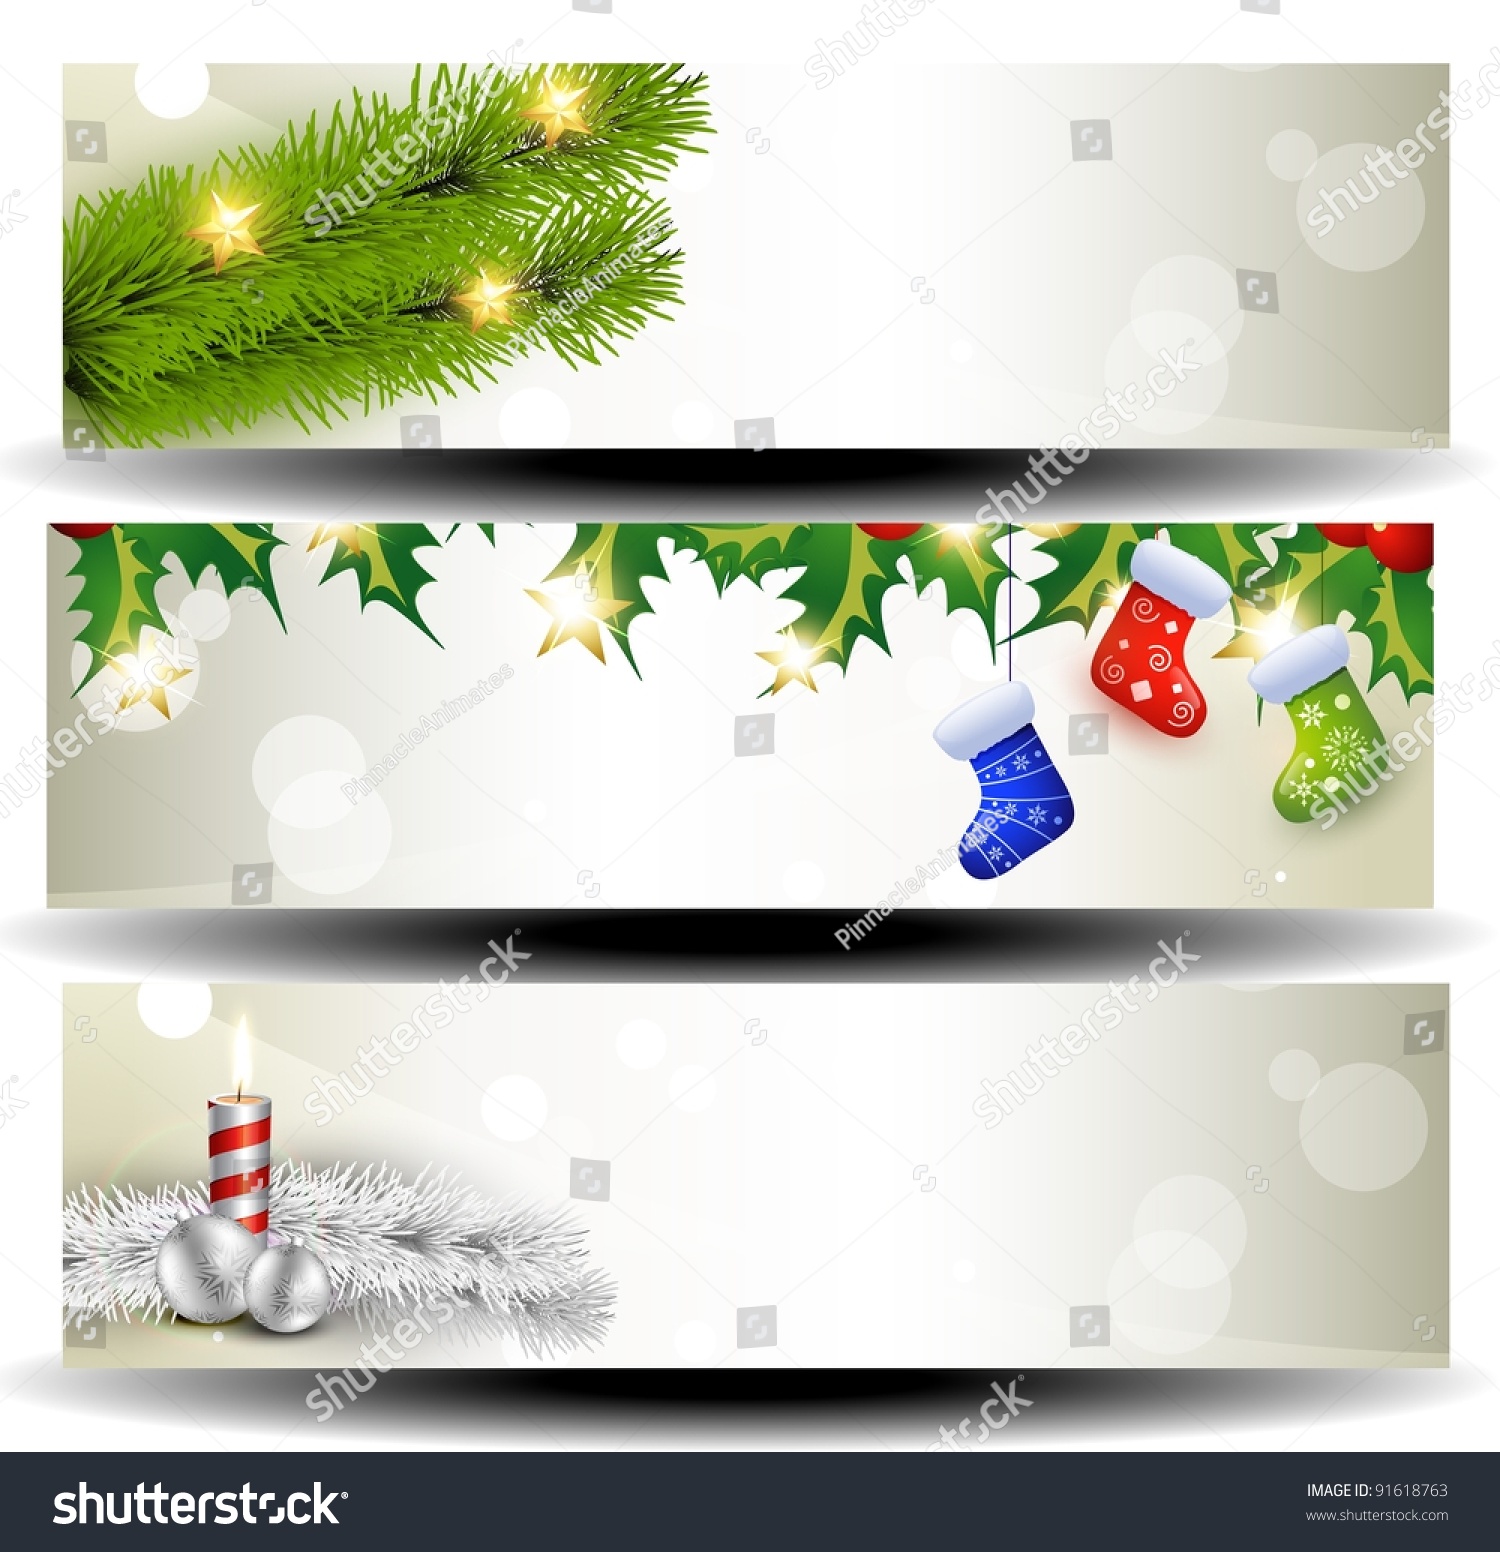 Vector Set Of Three Christmas Headers - 91618763 : Shutterstock